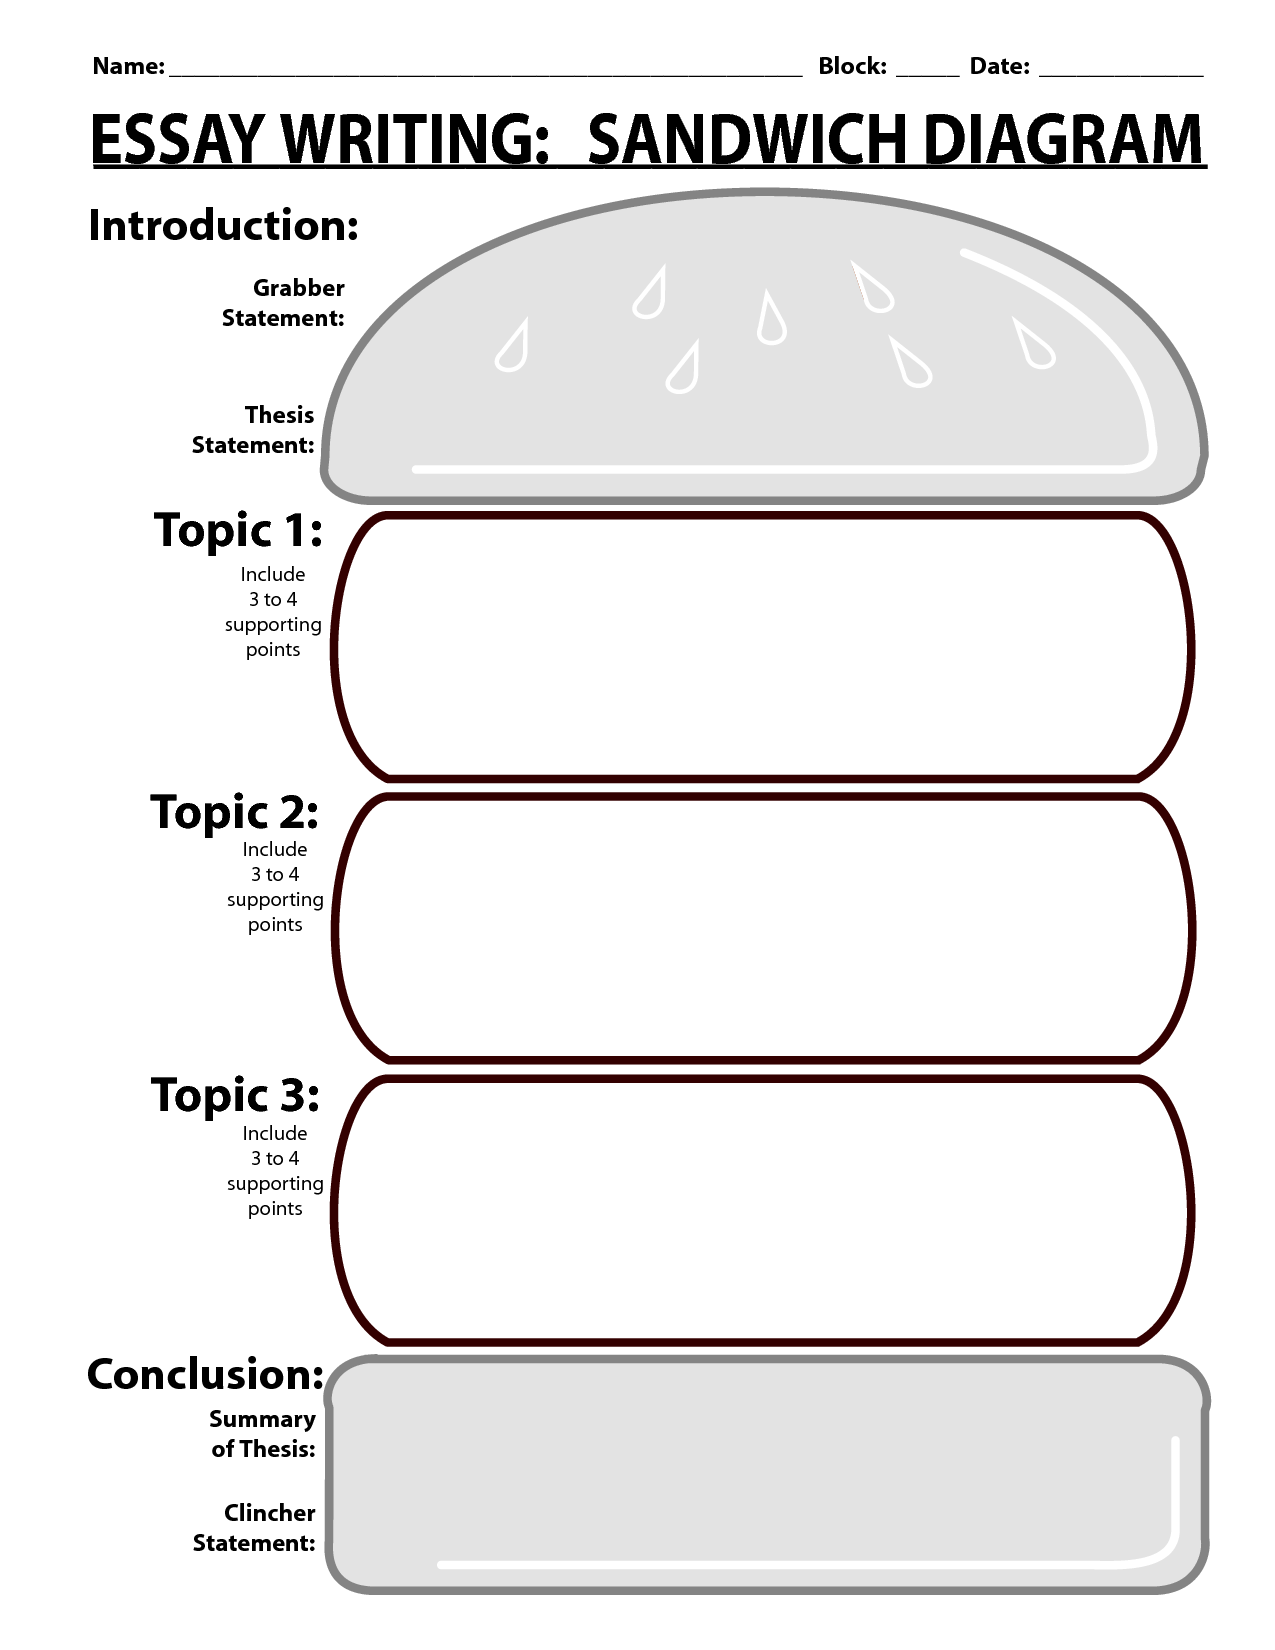 Sandwich Writing Template | ESSAY WRITING SANDWICH DIAGRAM   PDF 